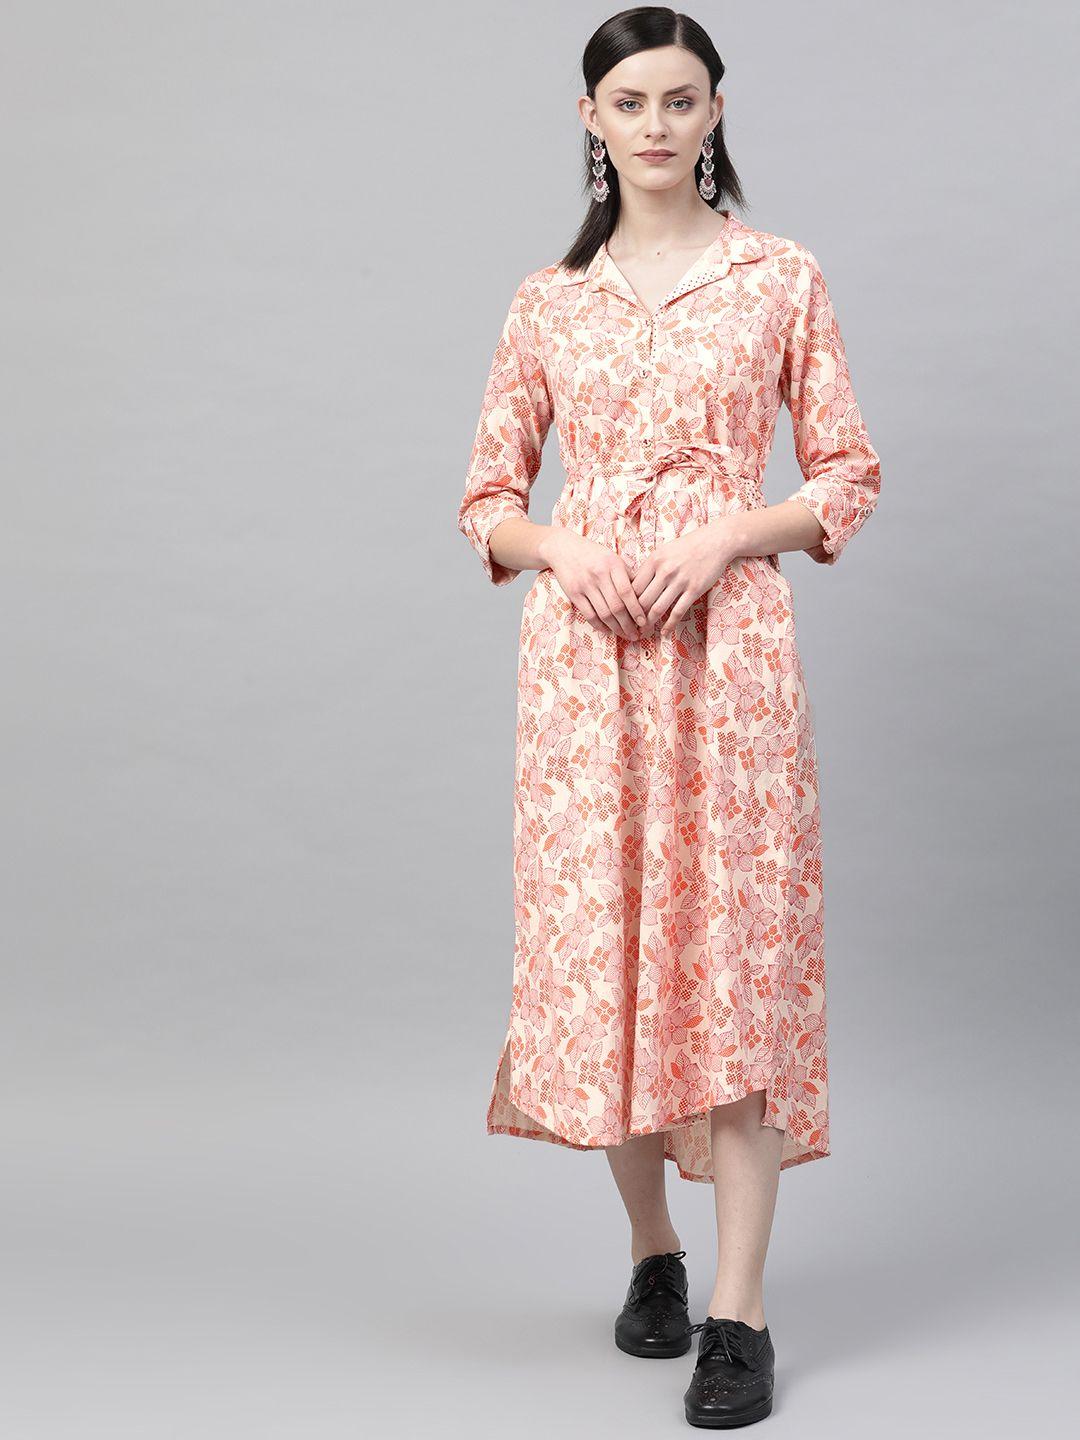 rangriti women cream-coloured & orange floral print shirt dress